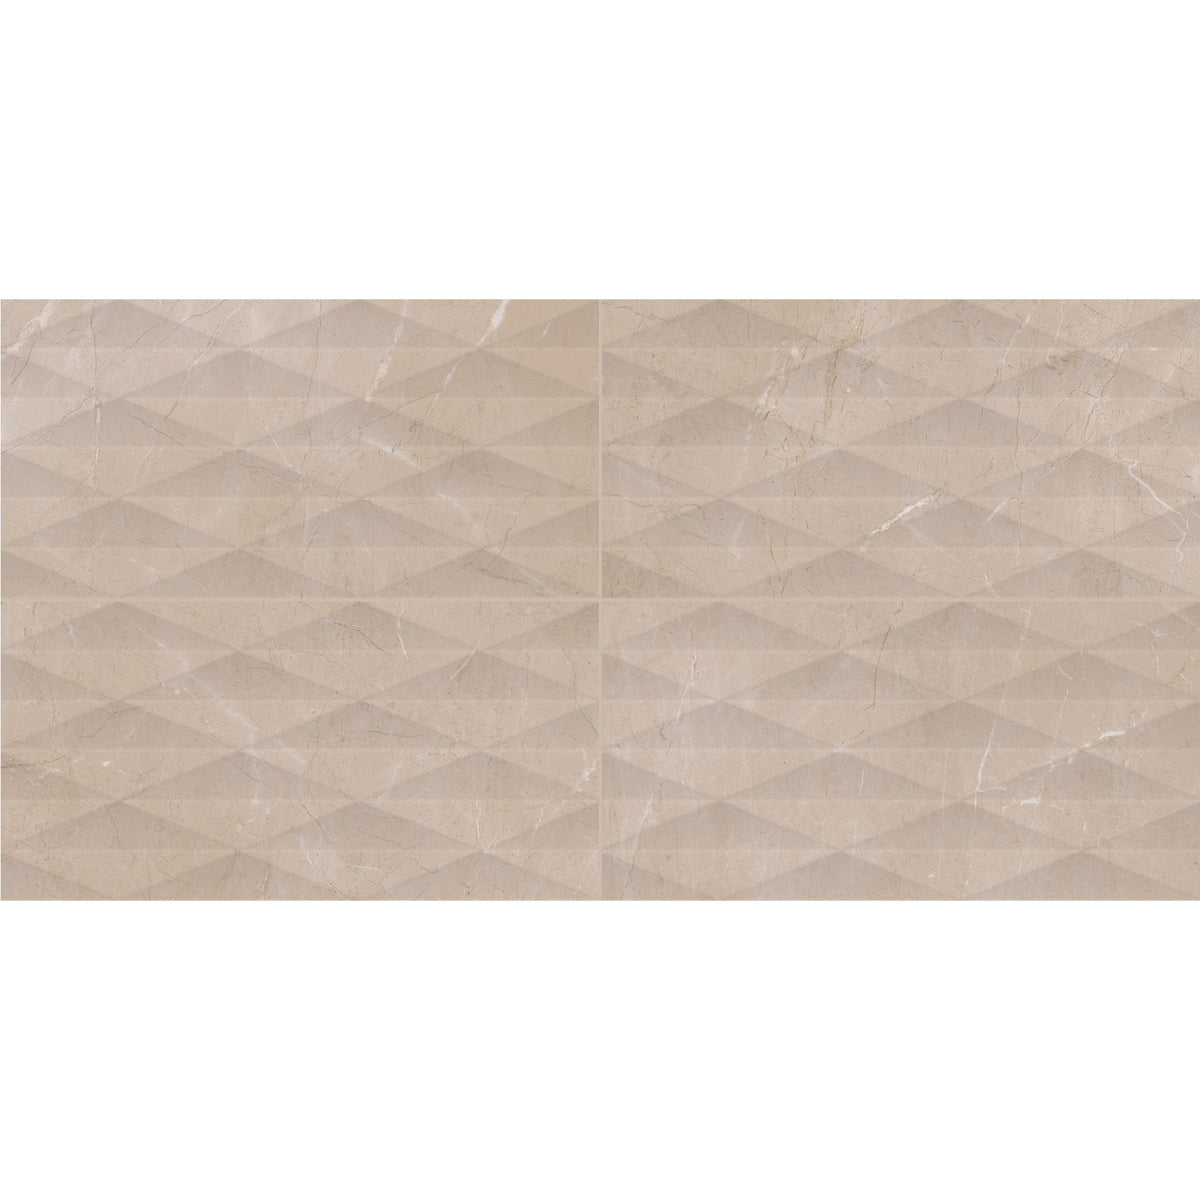 Daltile - Perpetuo - 12 in. x 24 in. Glazed Ceramic Multi-Geometric Wall Tile - Elegant Beige Variation